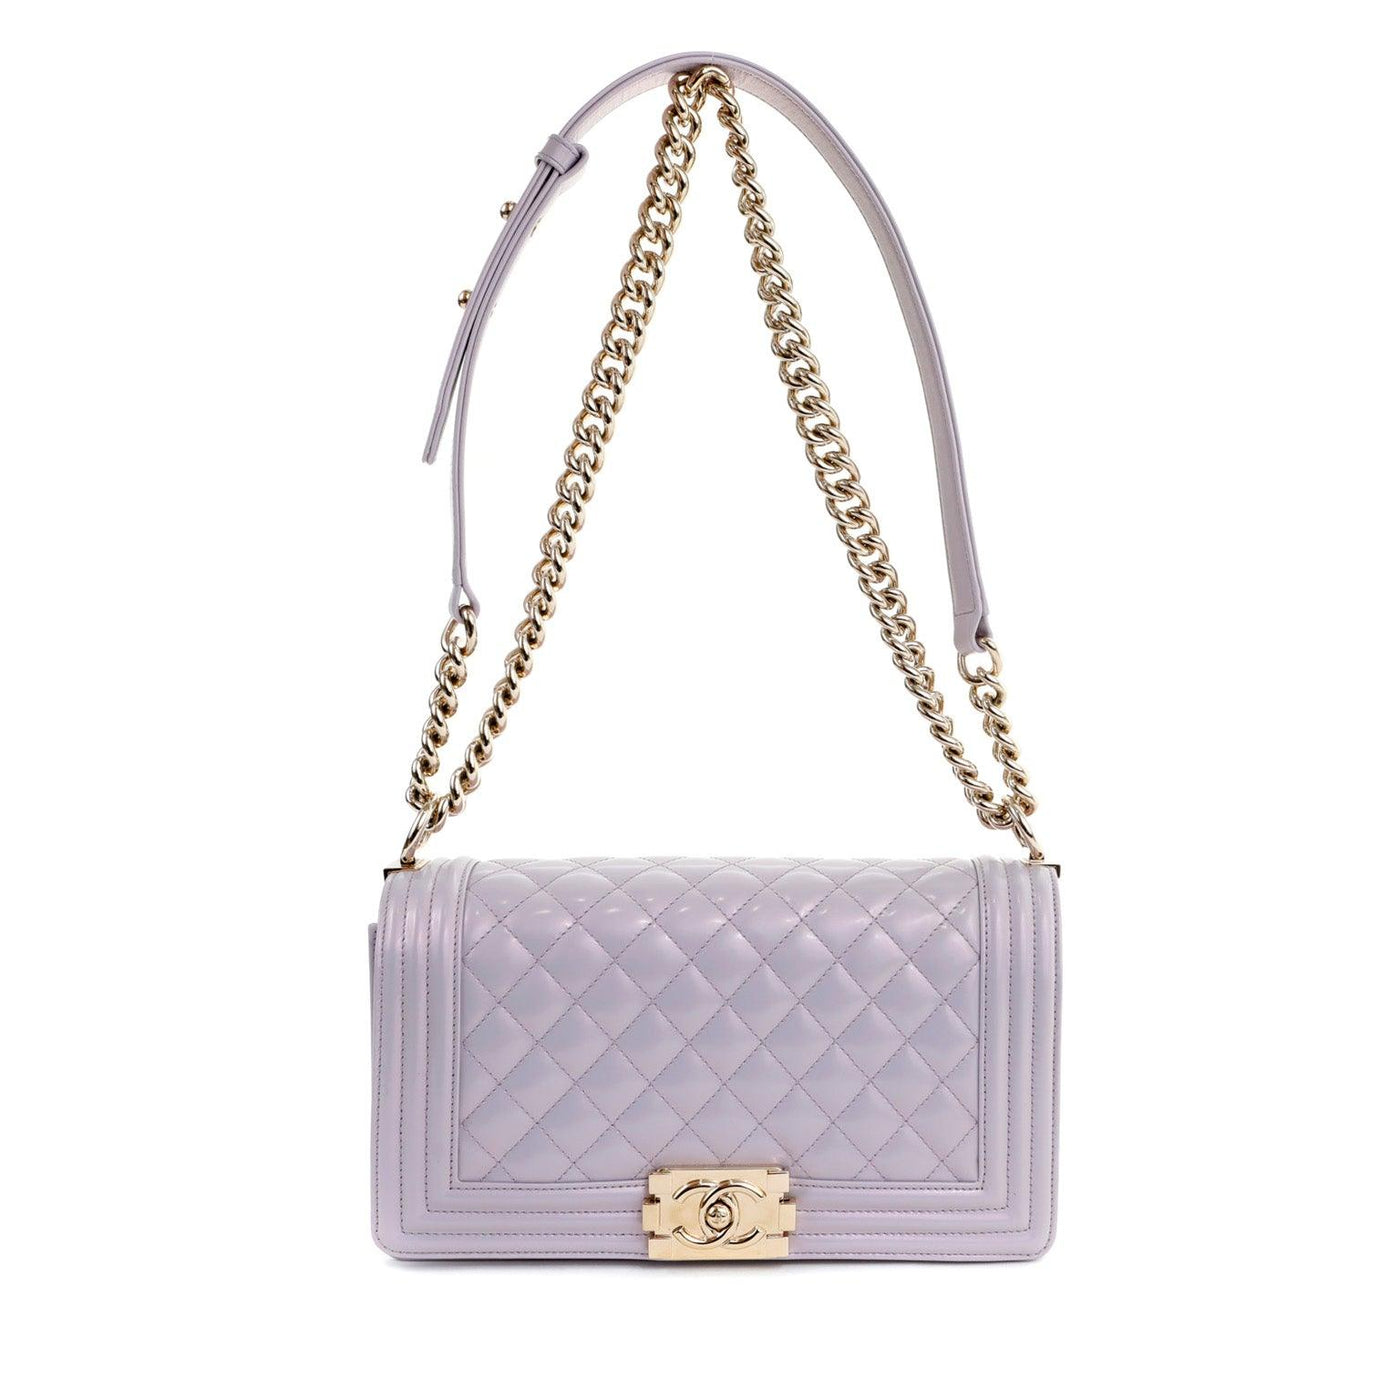 Chanel Lavender Patent Medium Boy Bag Gold Hardware - Only Authentics